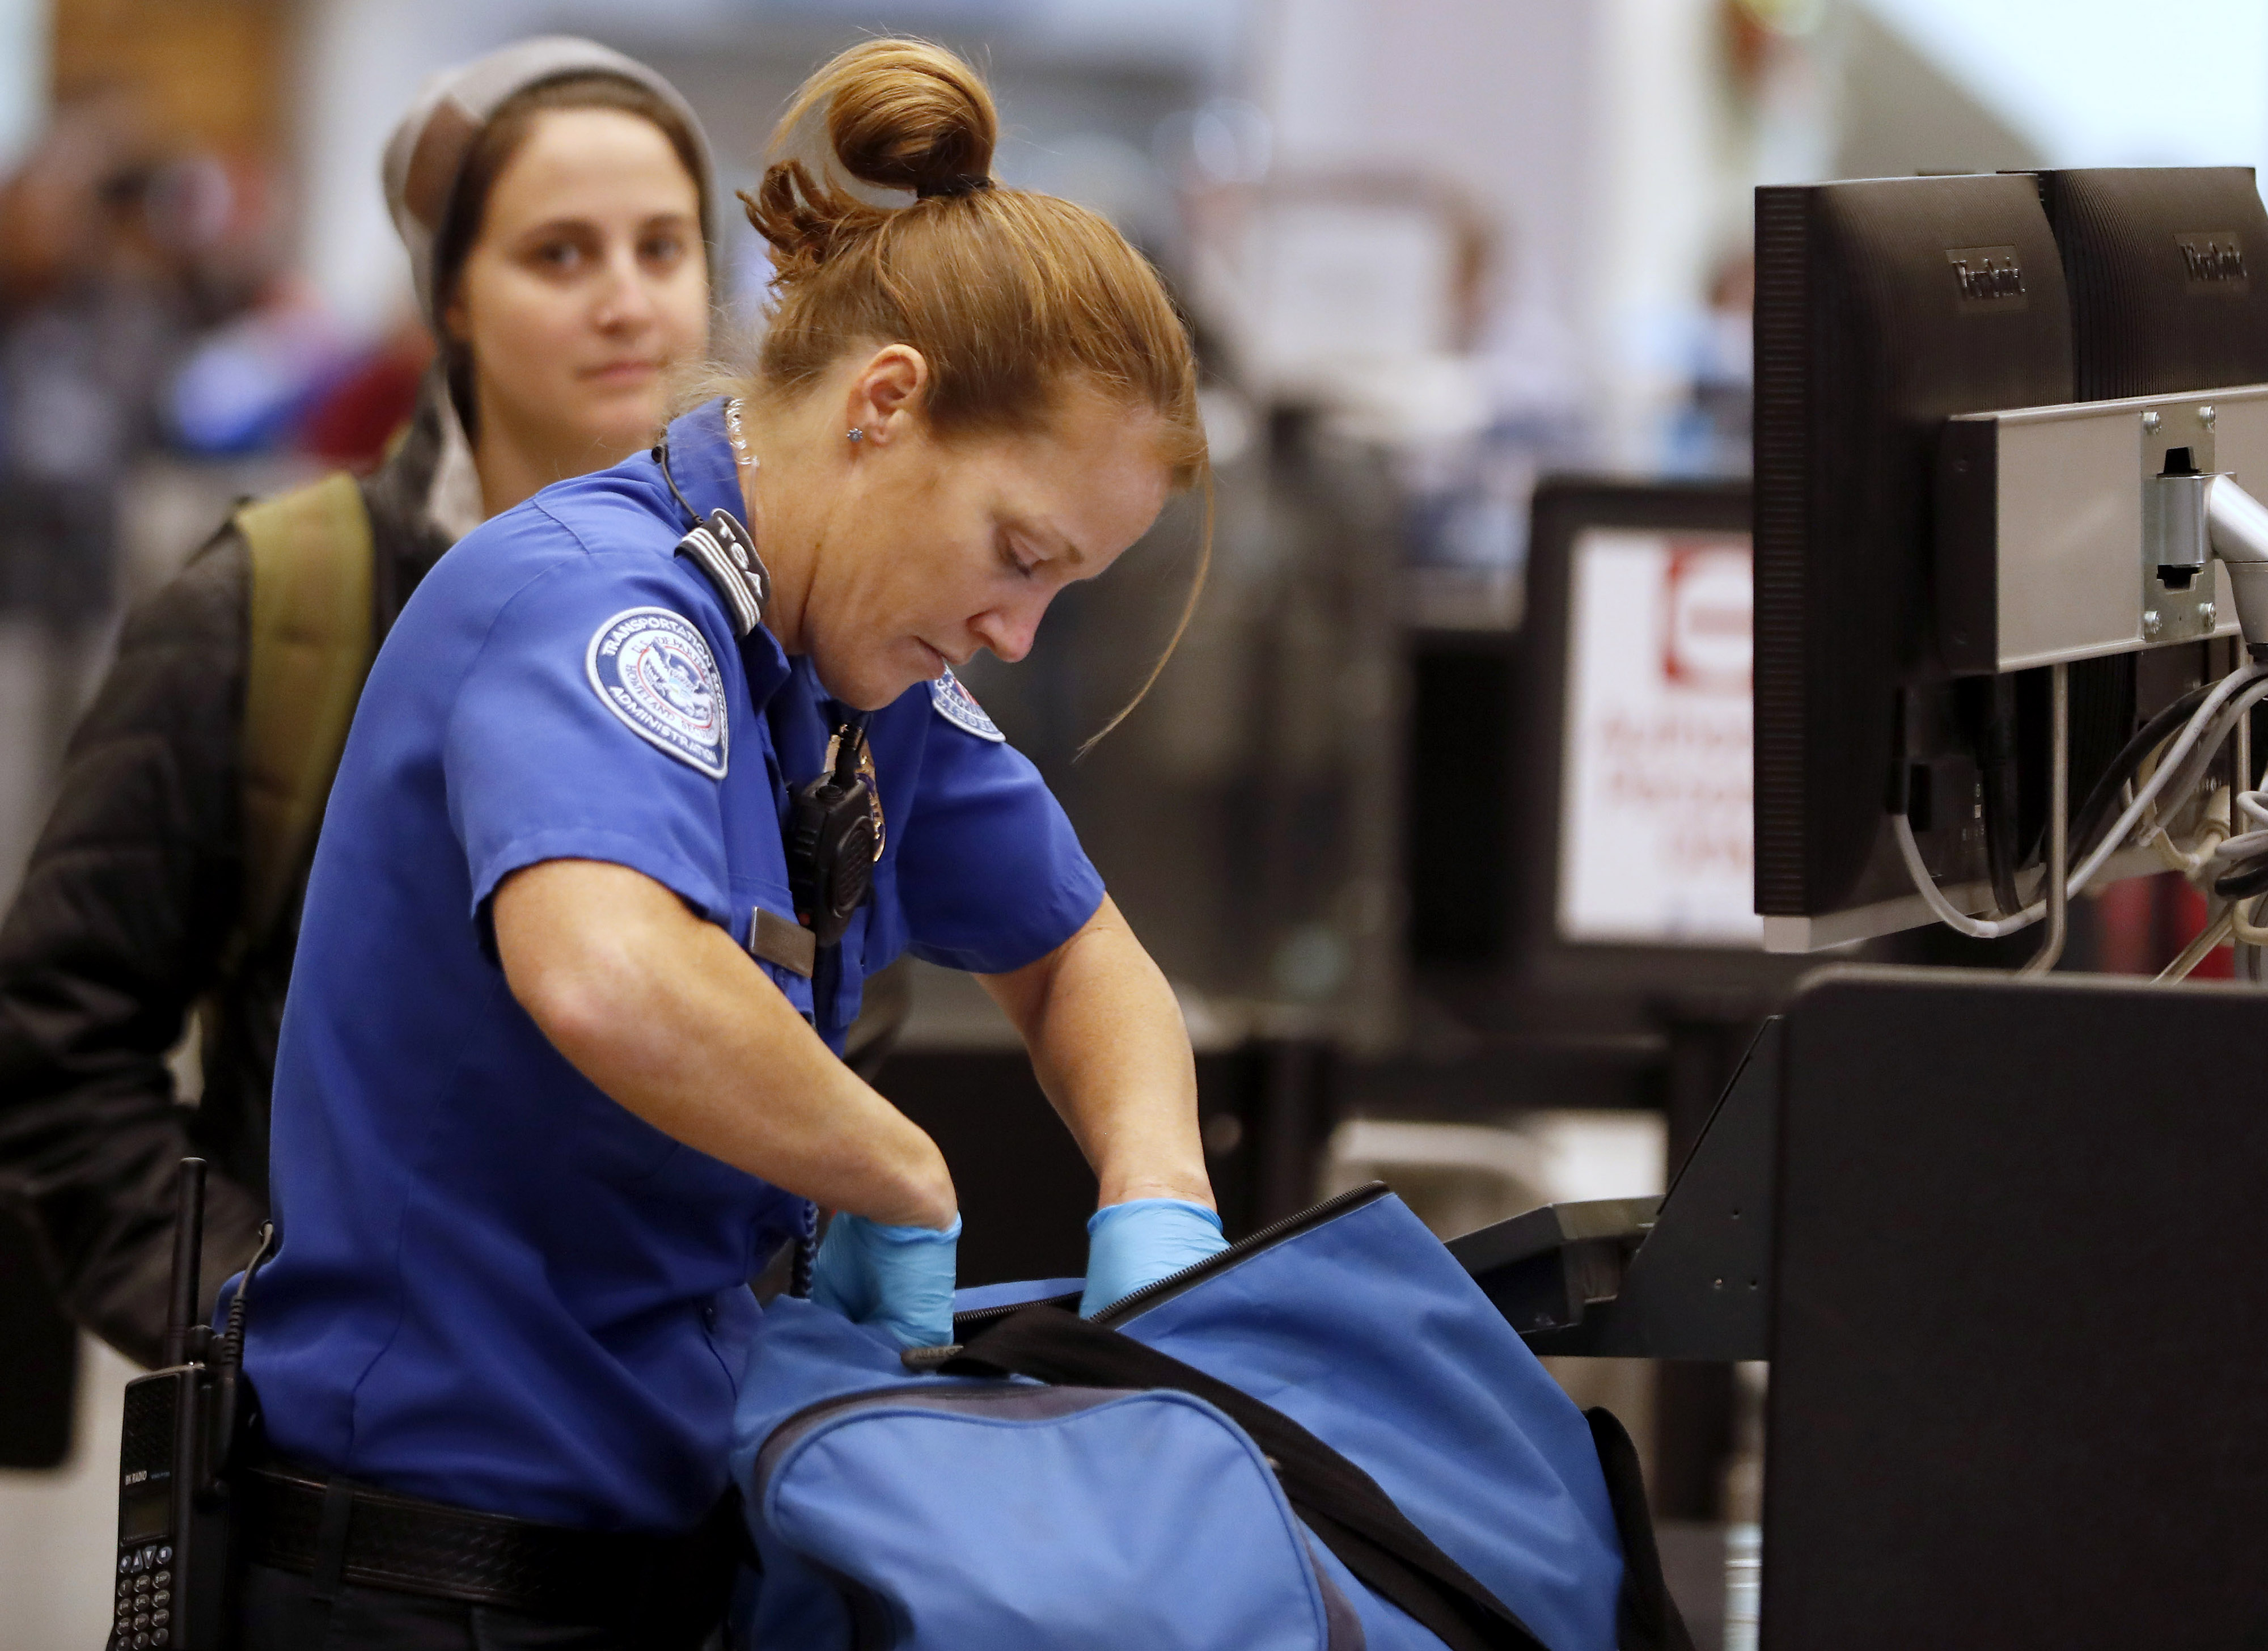 Travelers At Salt Lake City International Airport Ahead Of Holiday Weekend